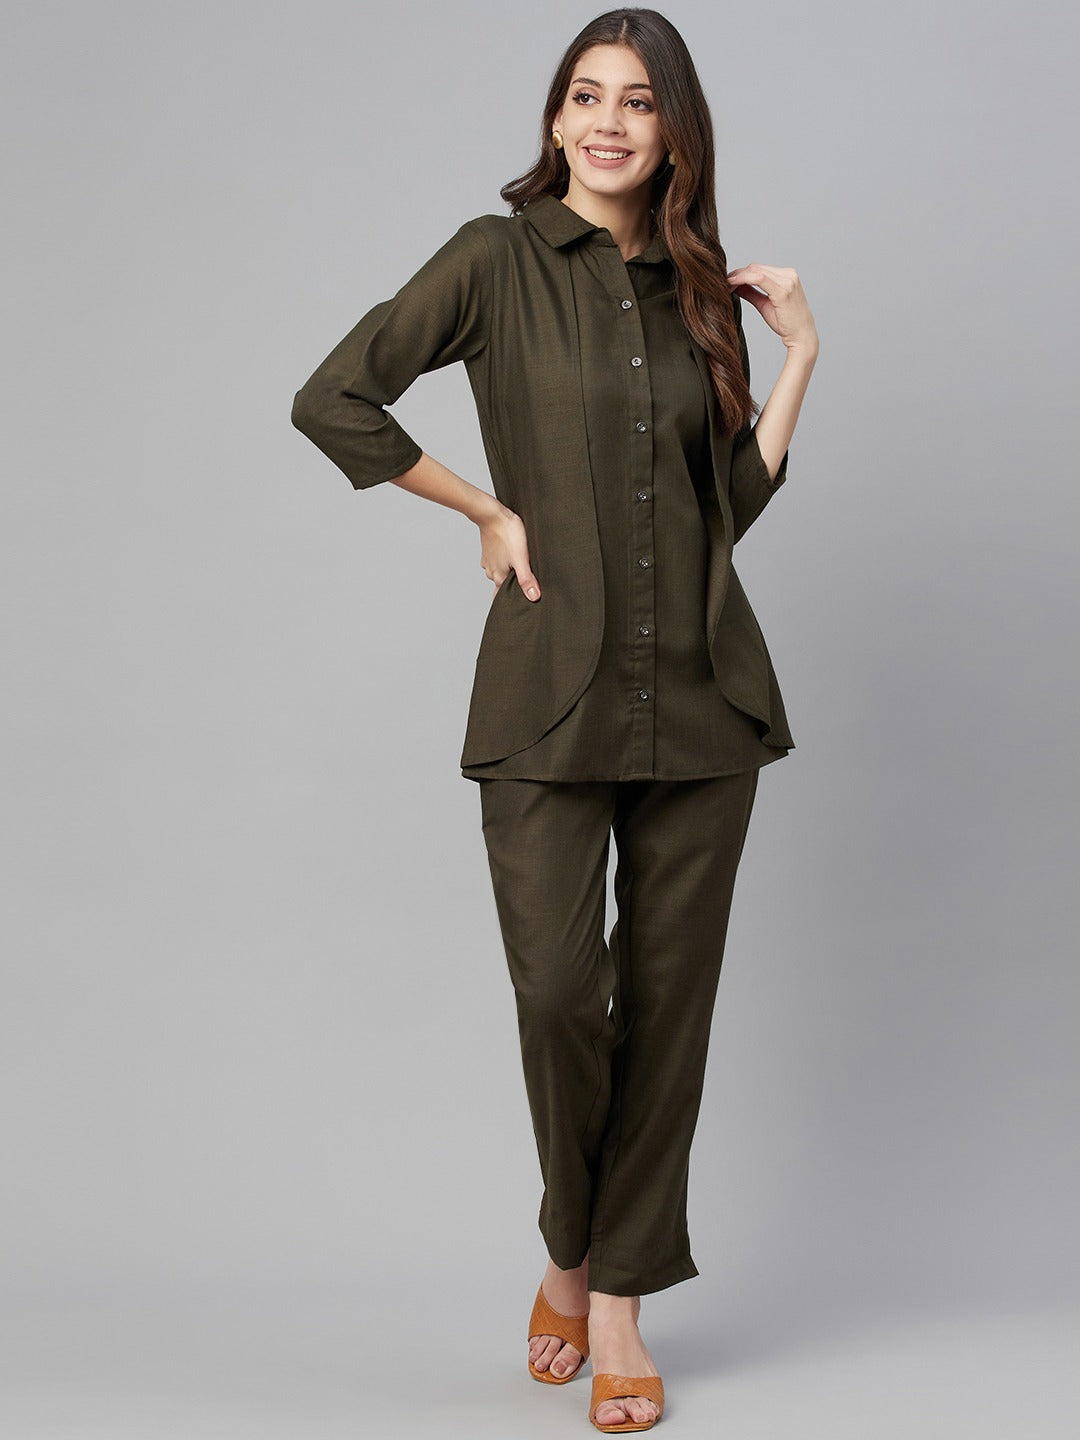 Parachute Pants - Khaki green - Ladies | H&M US